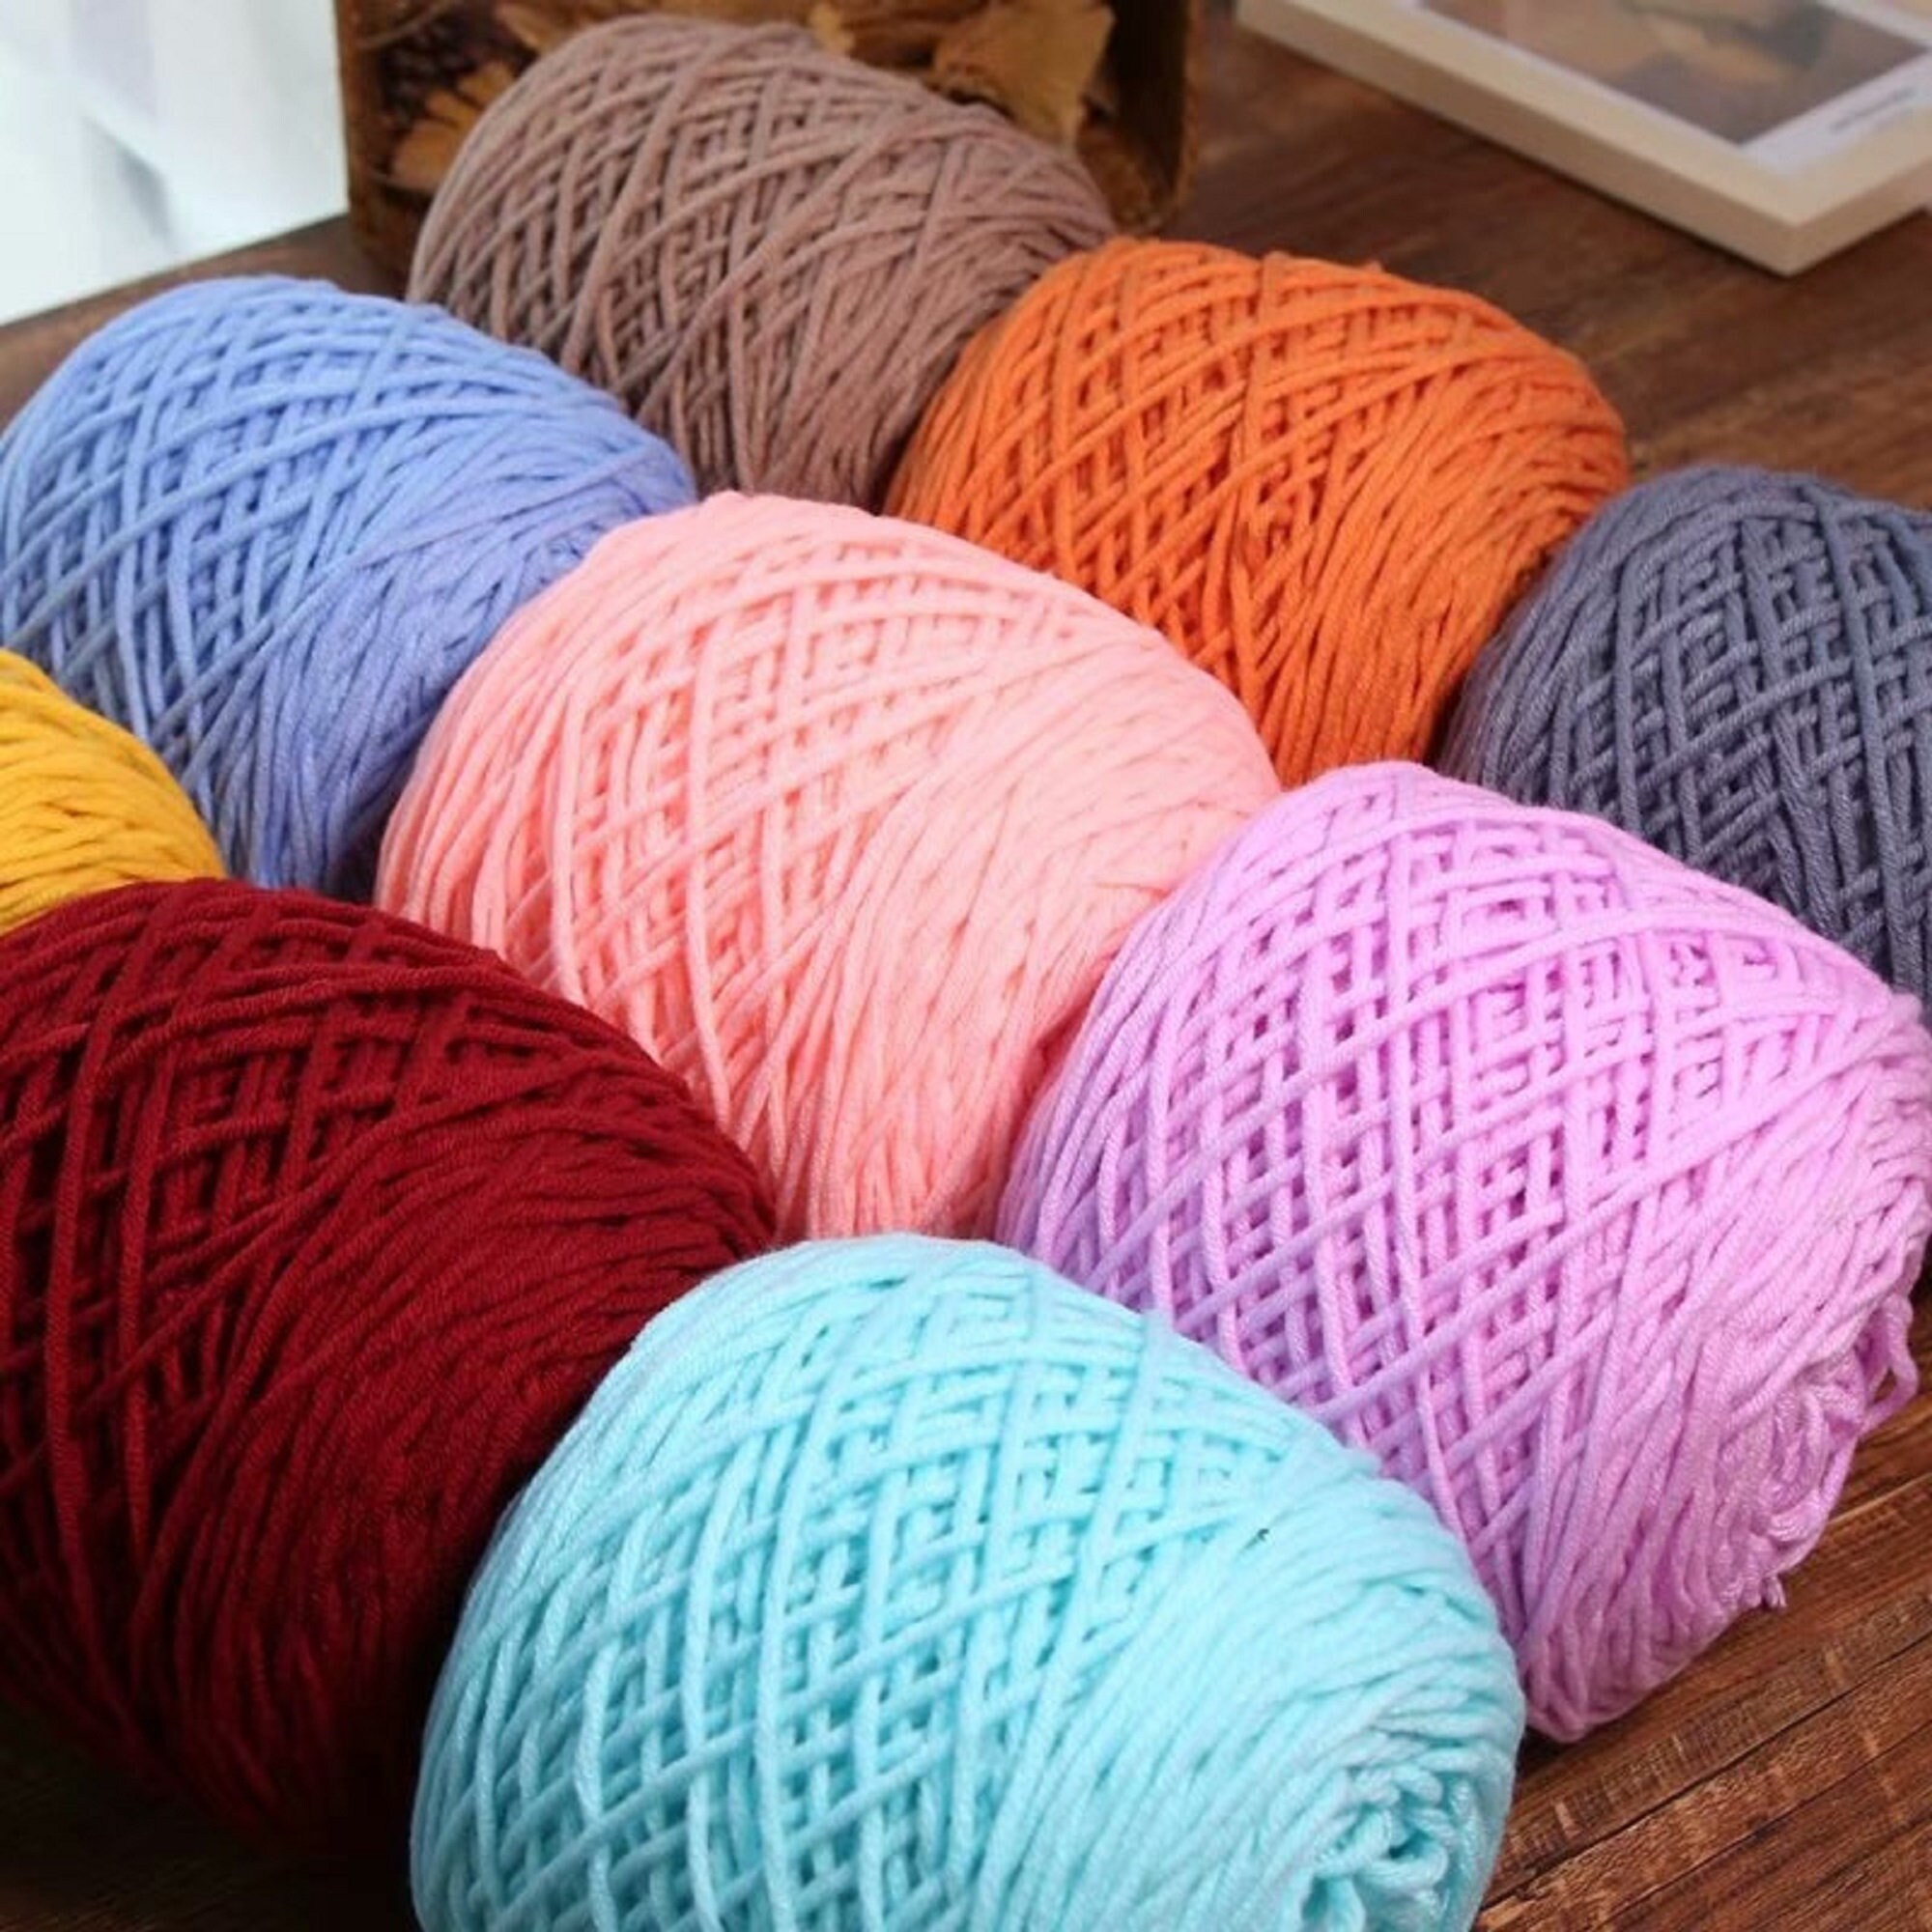 5pcs/Set DIY Milk Cotton Crochet Yarn Multicolors High Quality Soft Hand  Knitting Line For Sweater